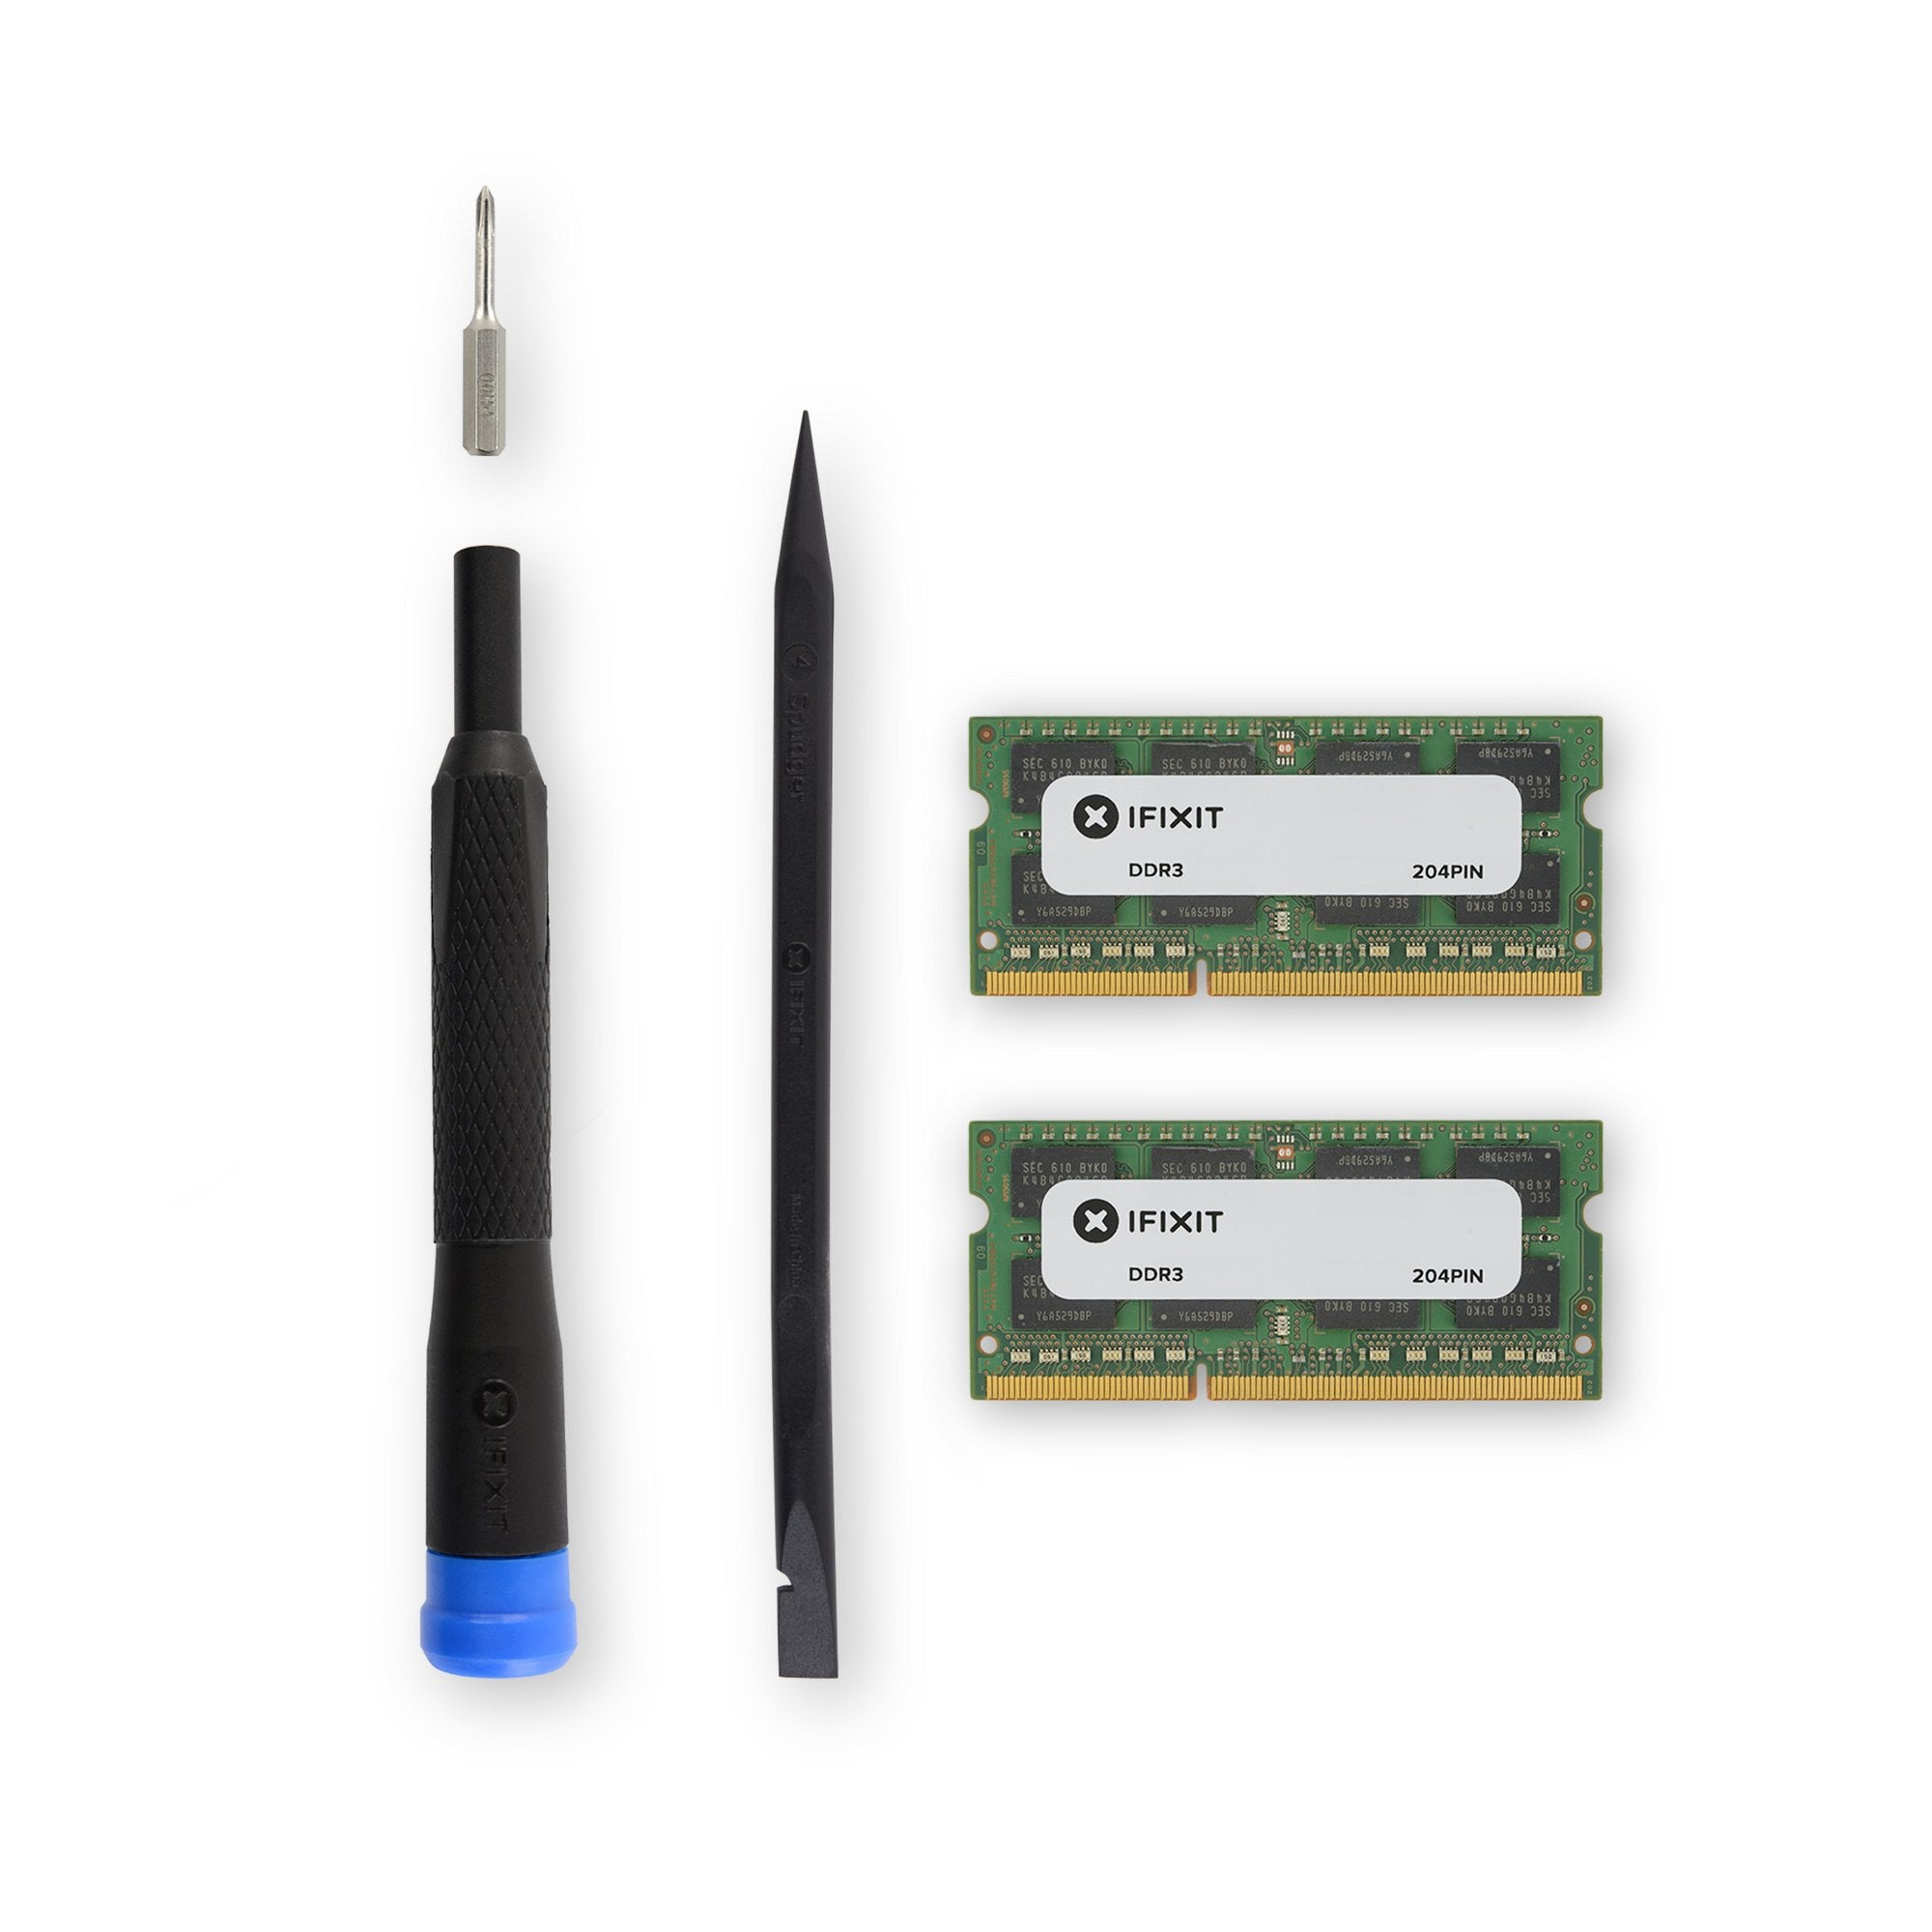 MacBook Pro 13" Unibody (Early 2011) Memory Maxxer RAM Upgrade Kit New